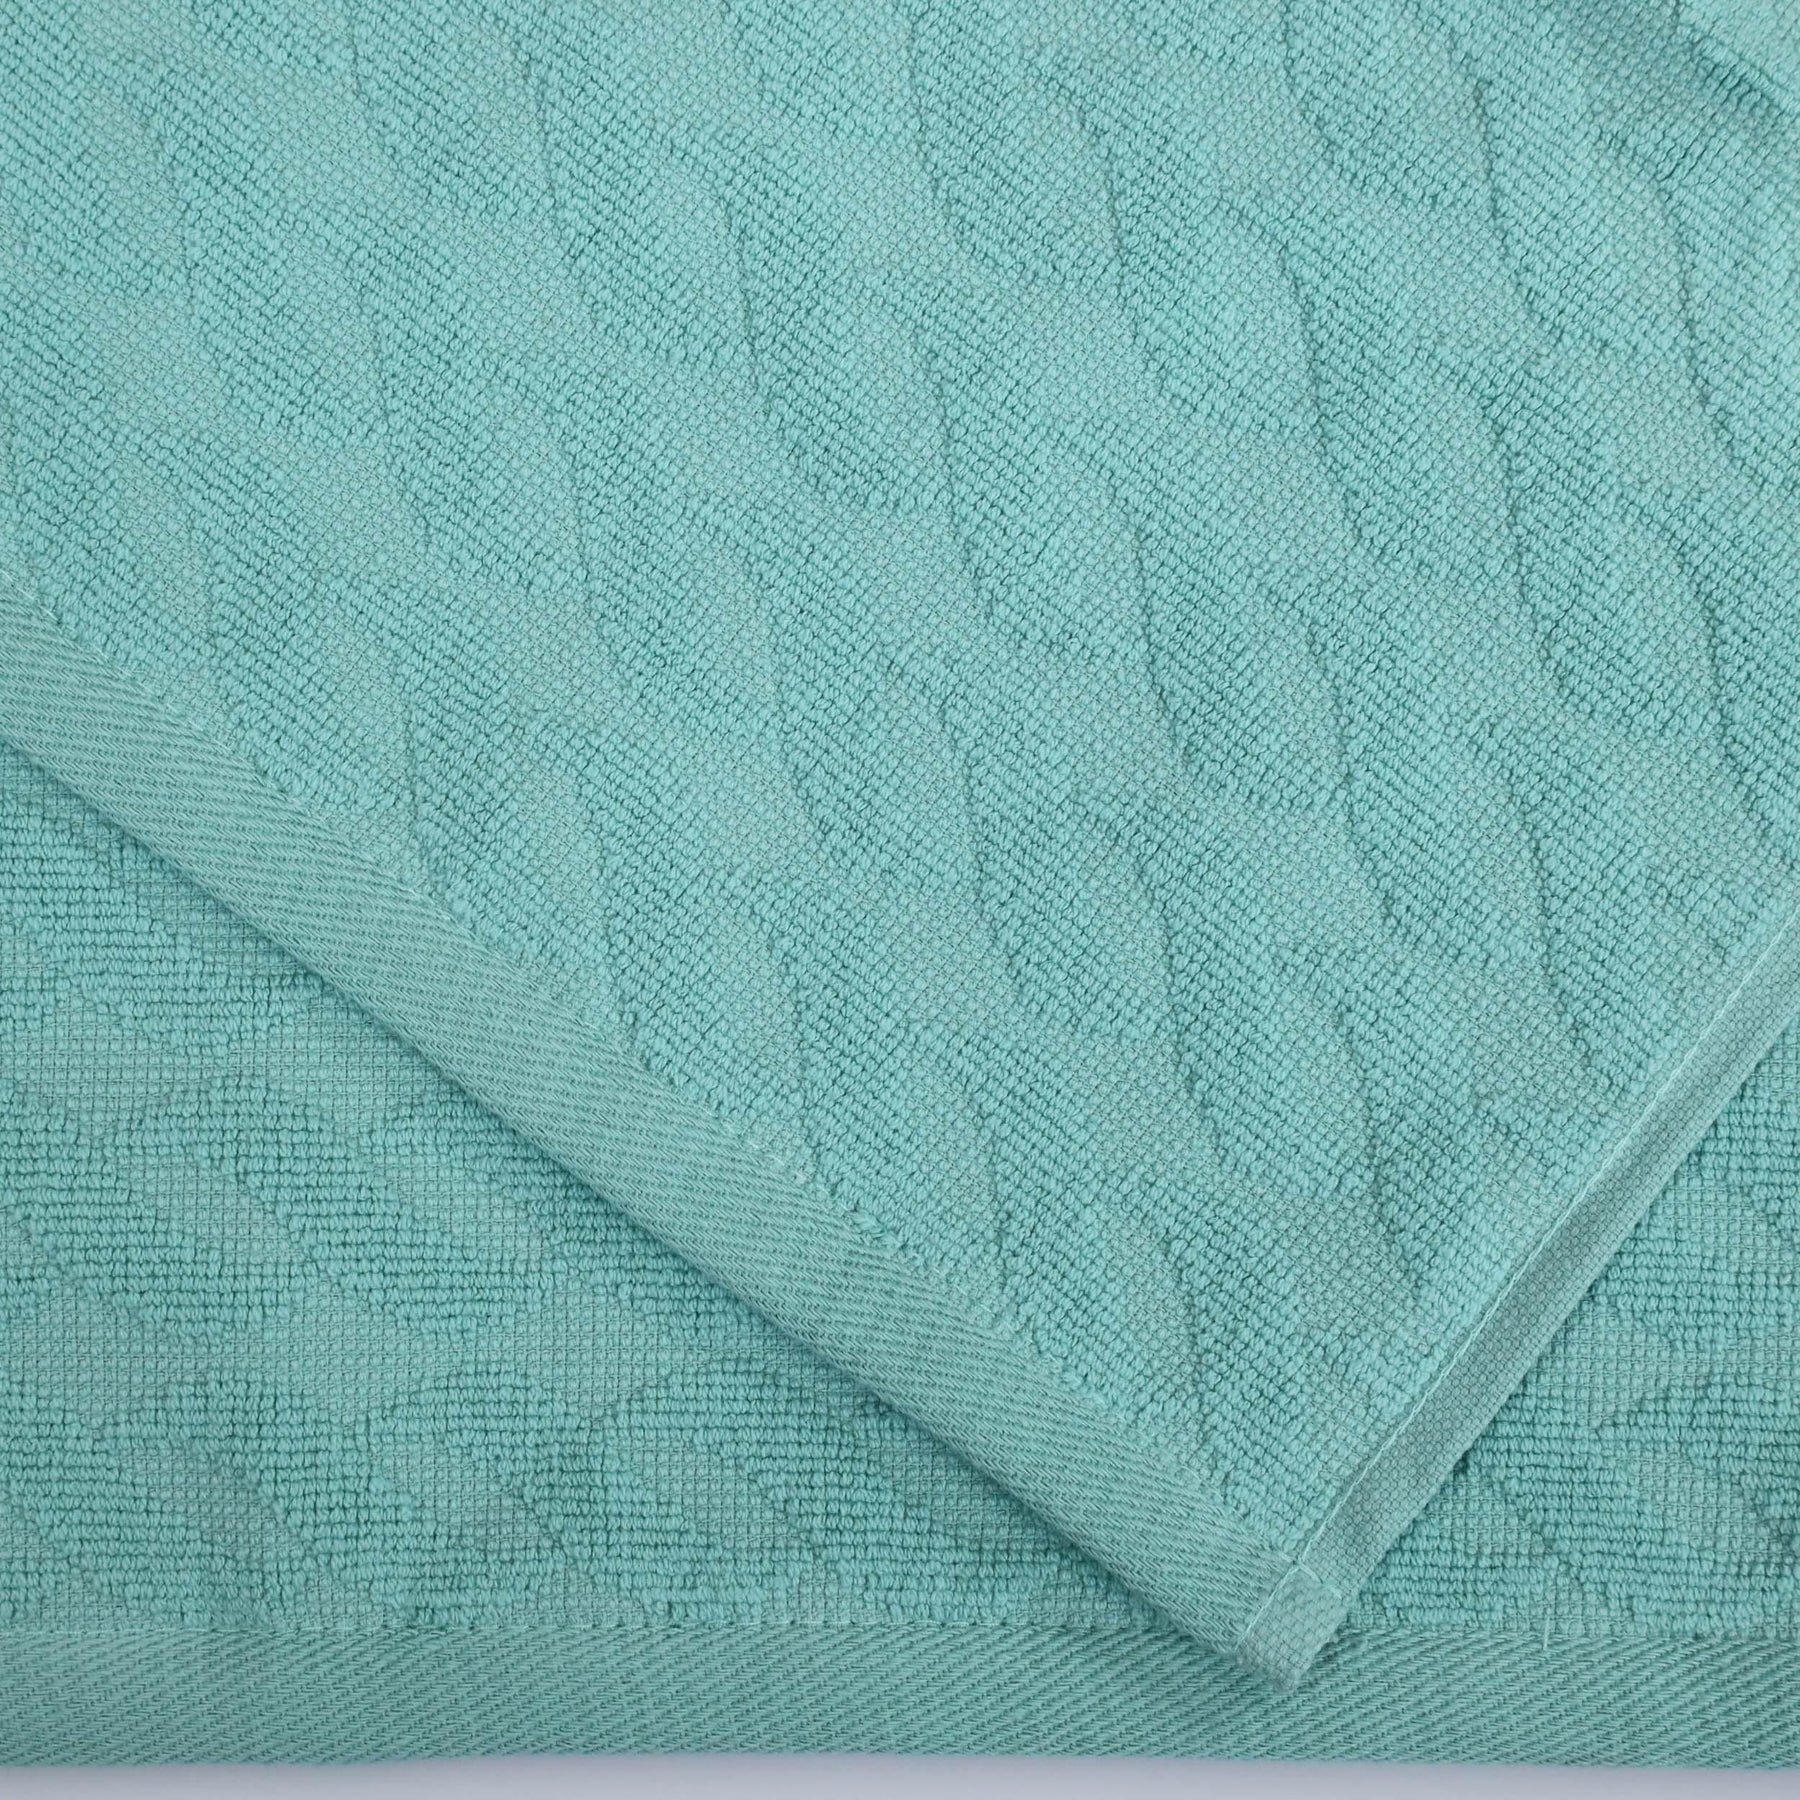 Premium Turkish Cotton Herringbone Jacquard Assorted 6-Piece Towel Set - Cascade